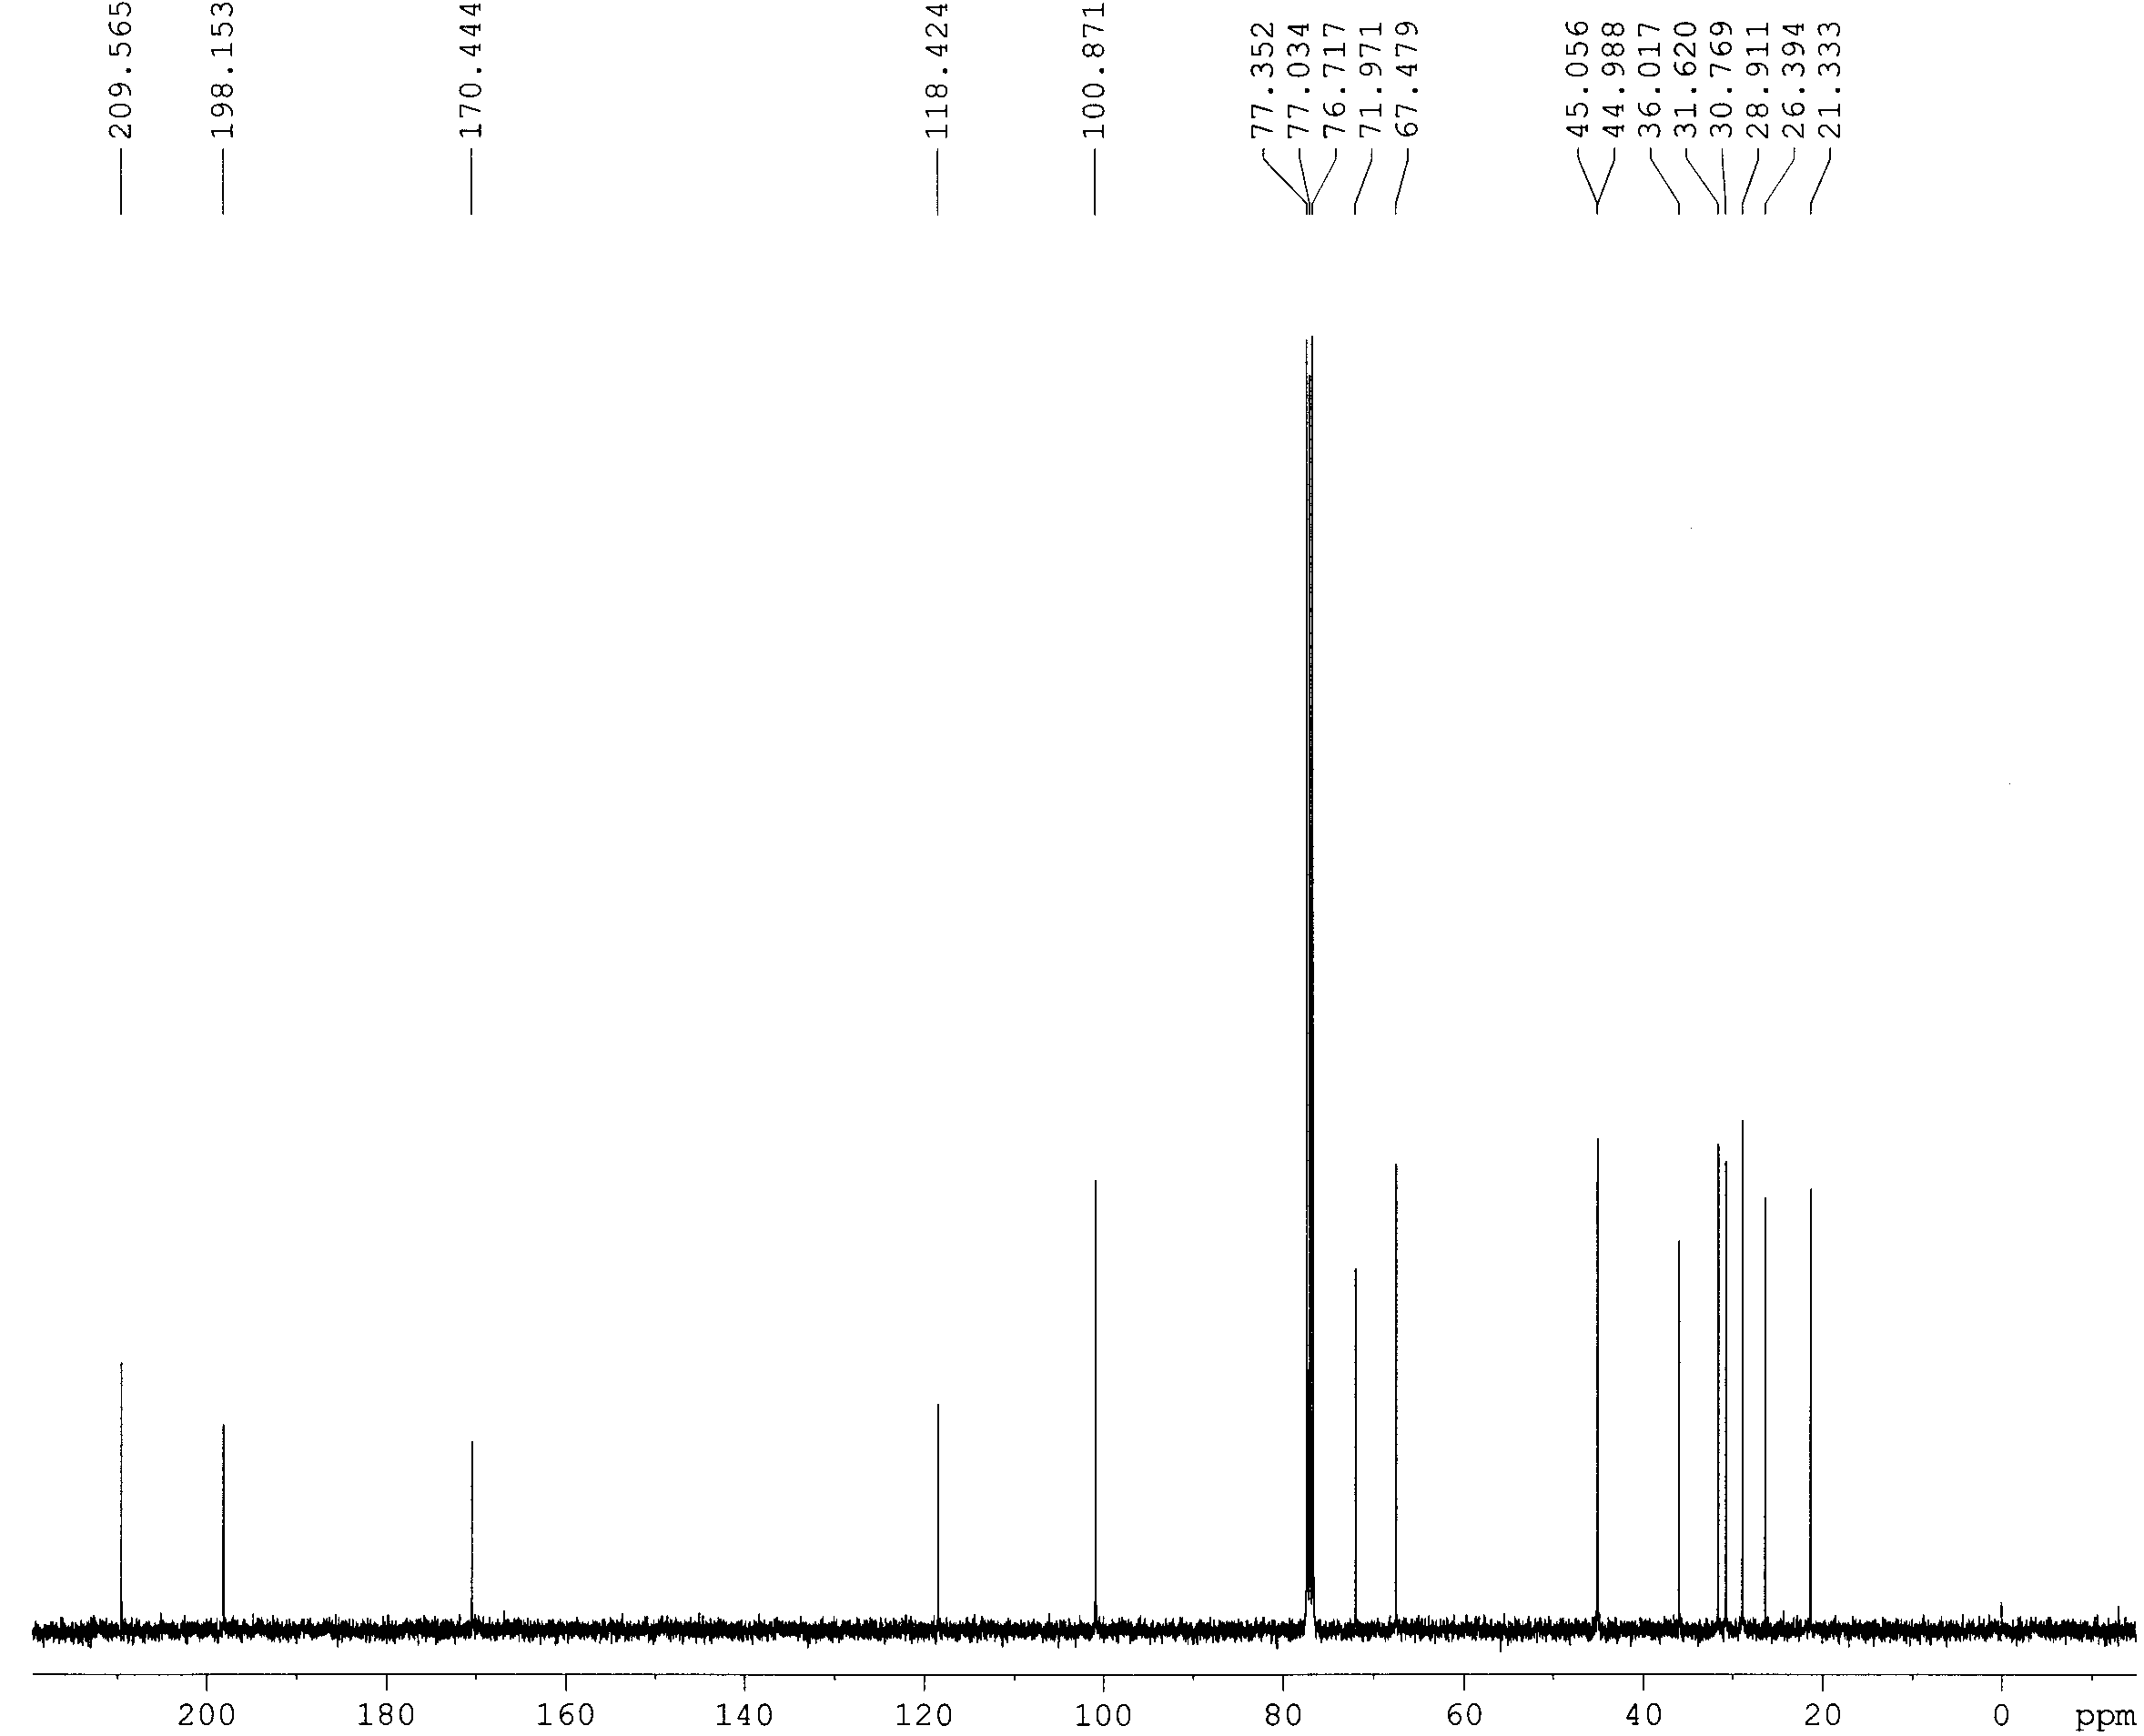 13C-NMR spectrum of compound 10